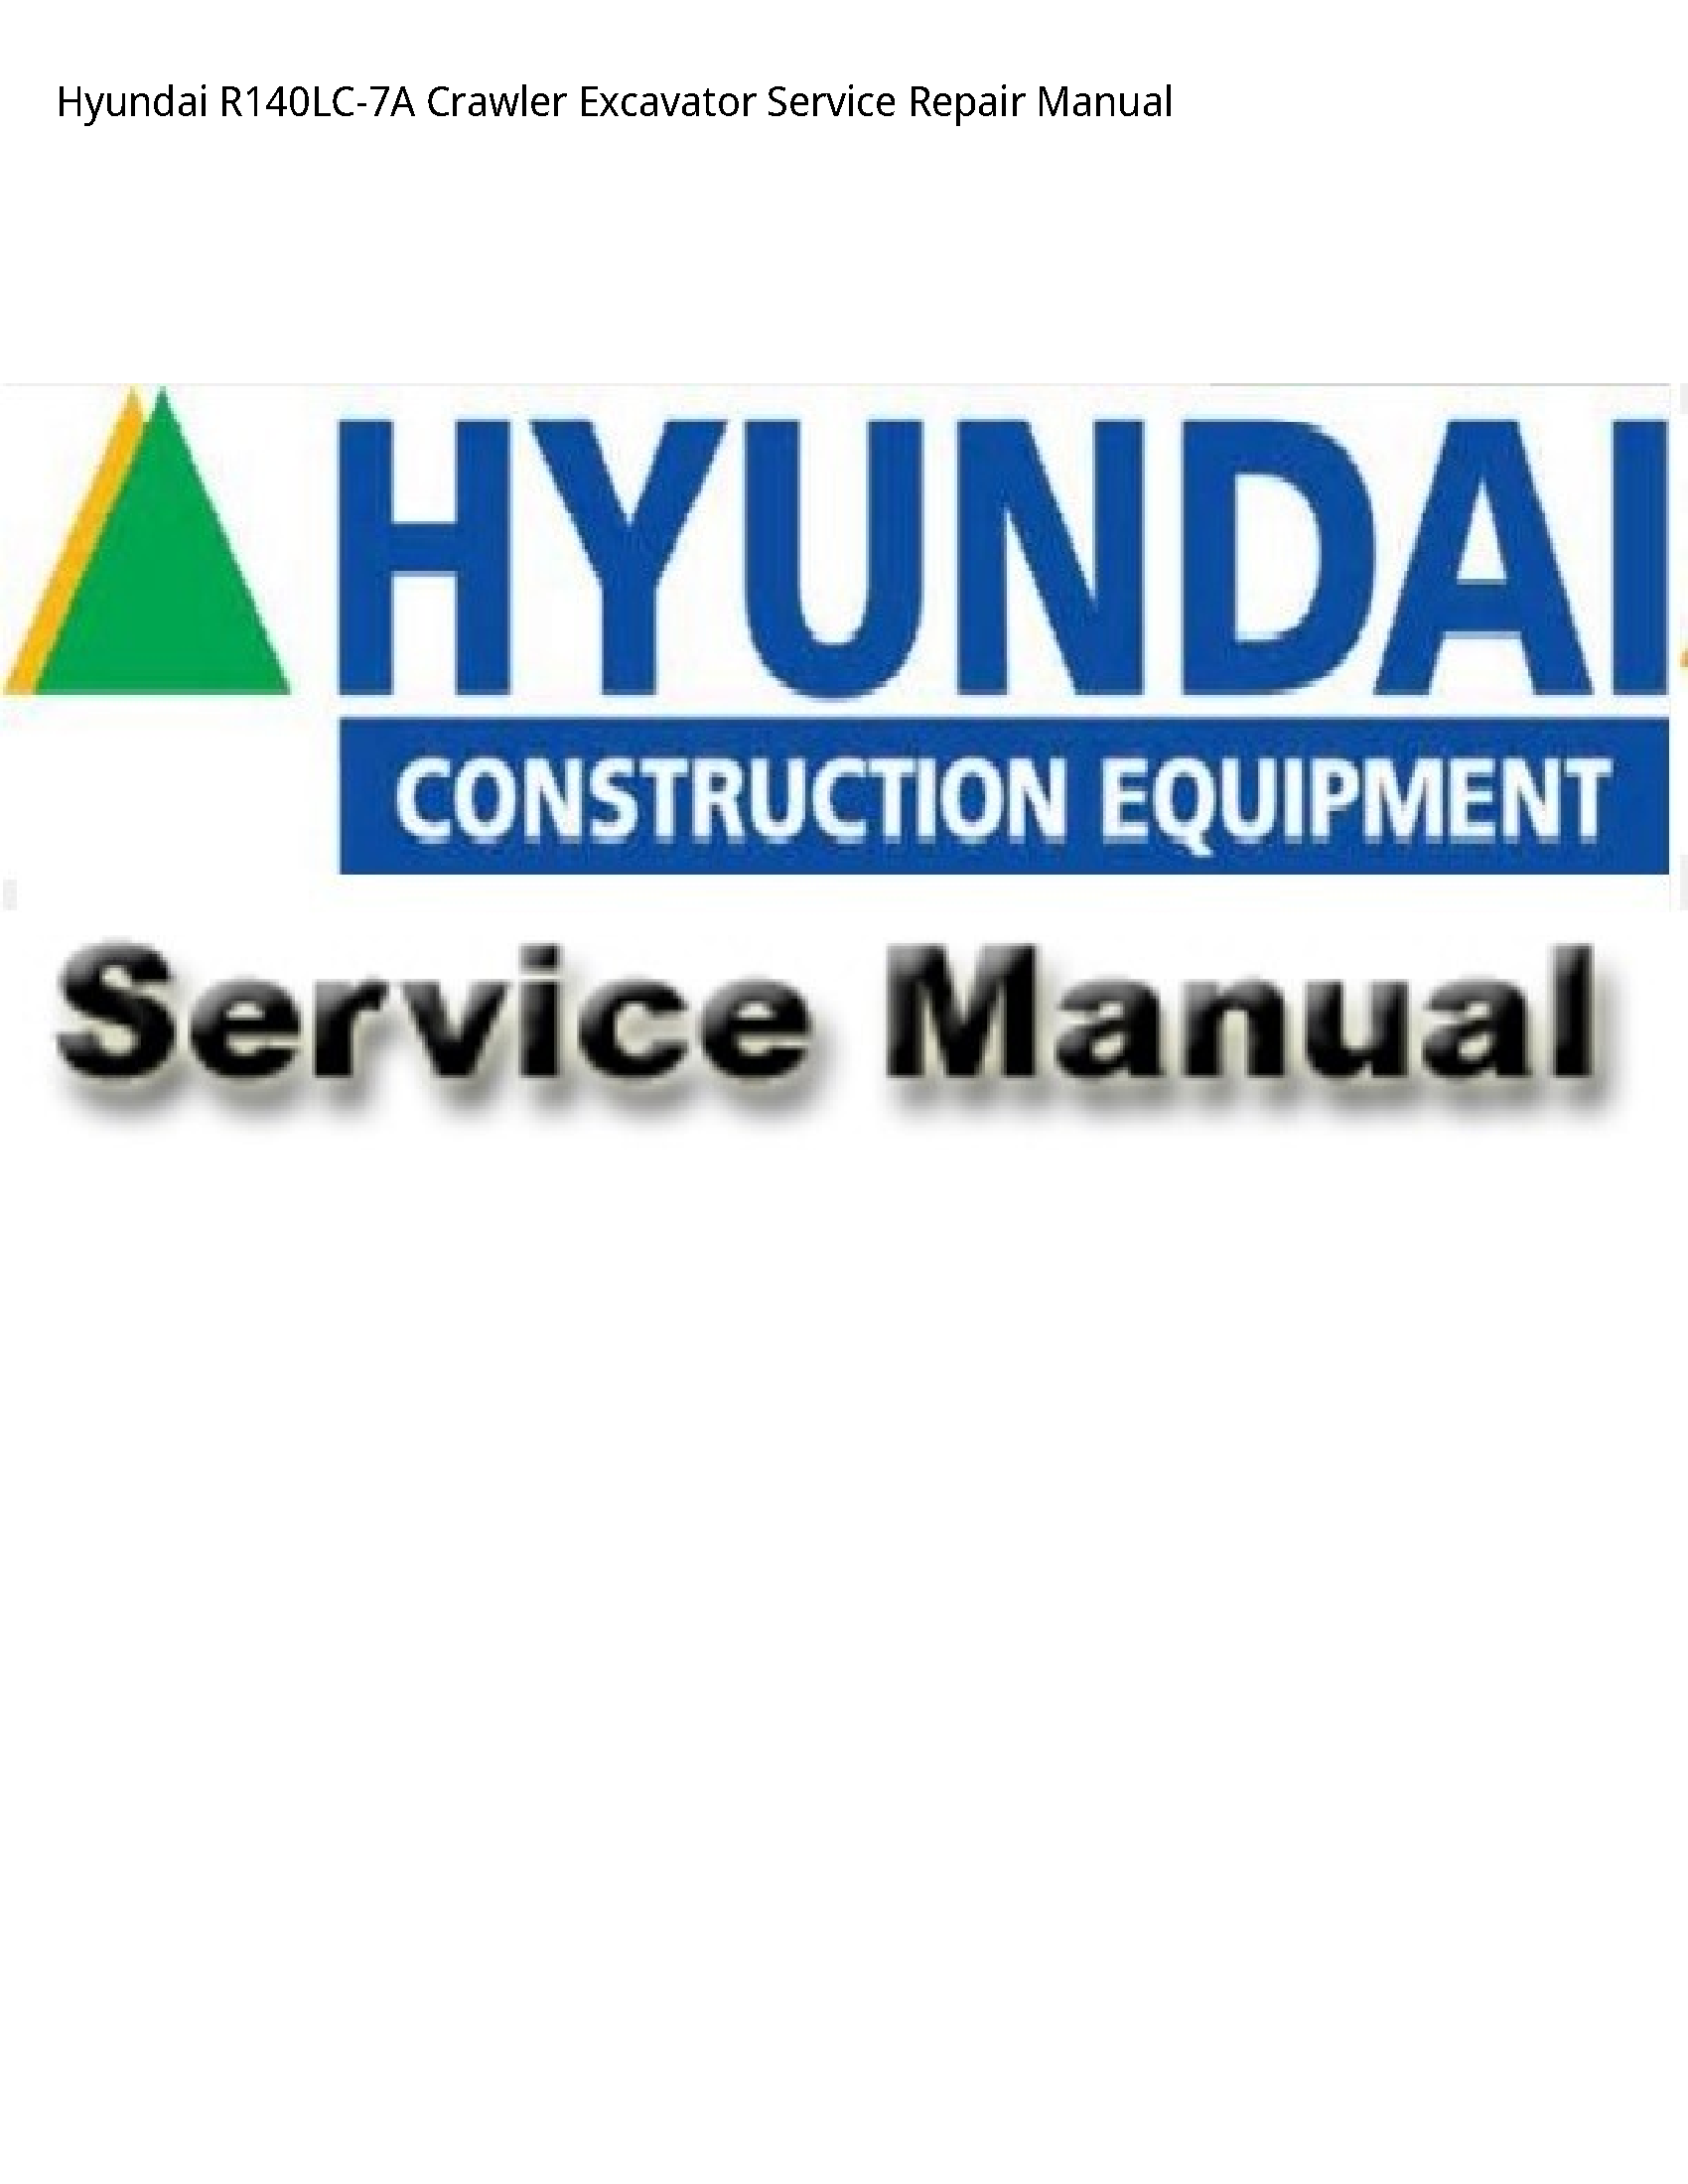 Hyundai R140LC-7A Crawler Excavator manual